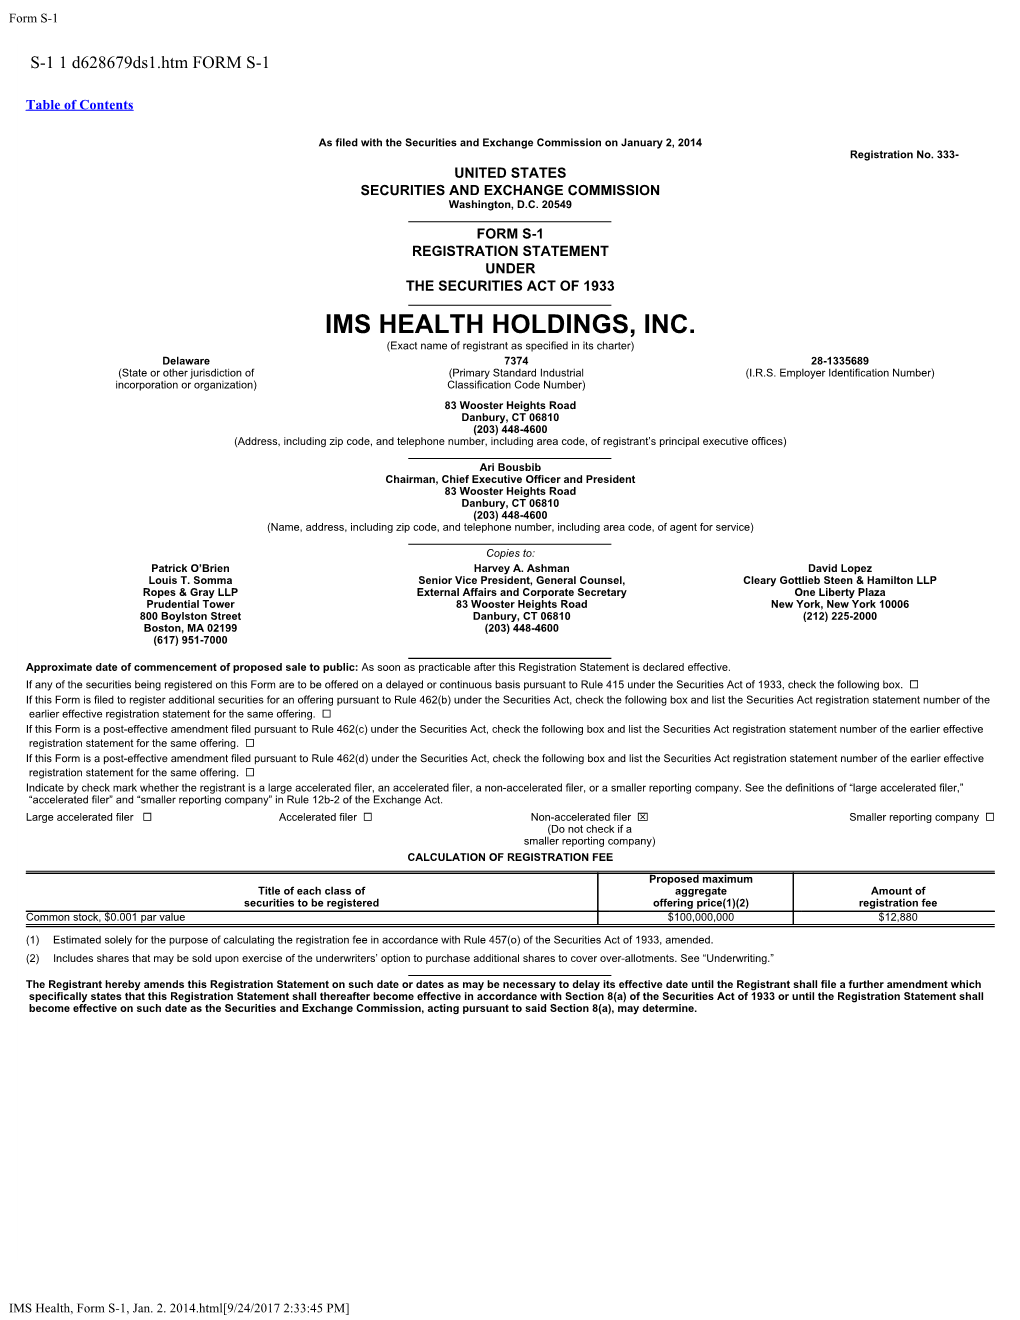 Form S-1, IMS Health Holdings, Inc., Filed Jan. 2, 2014